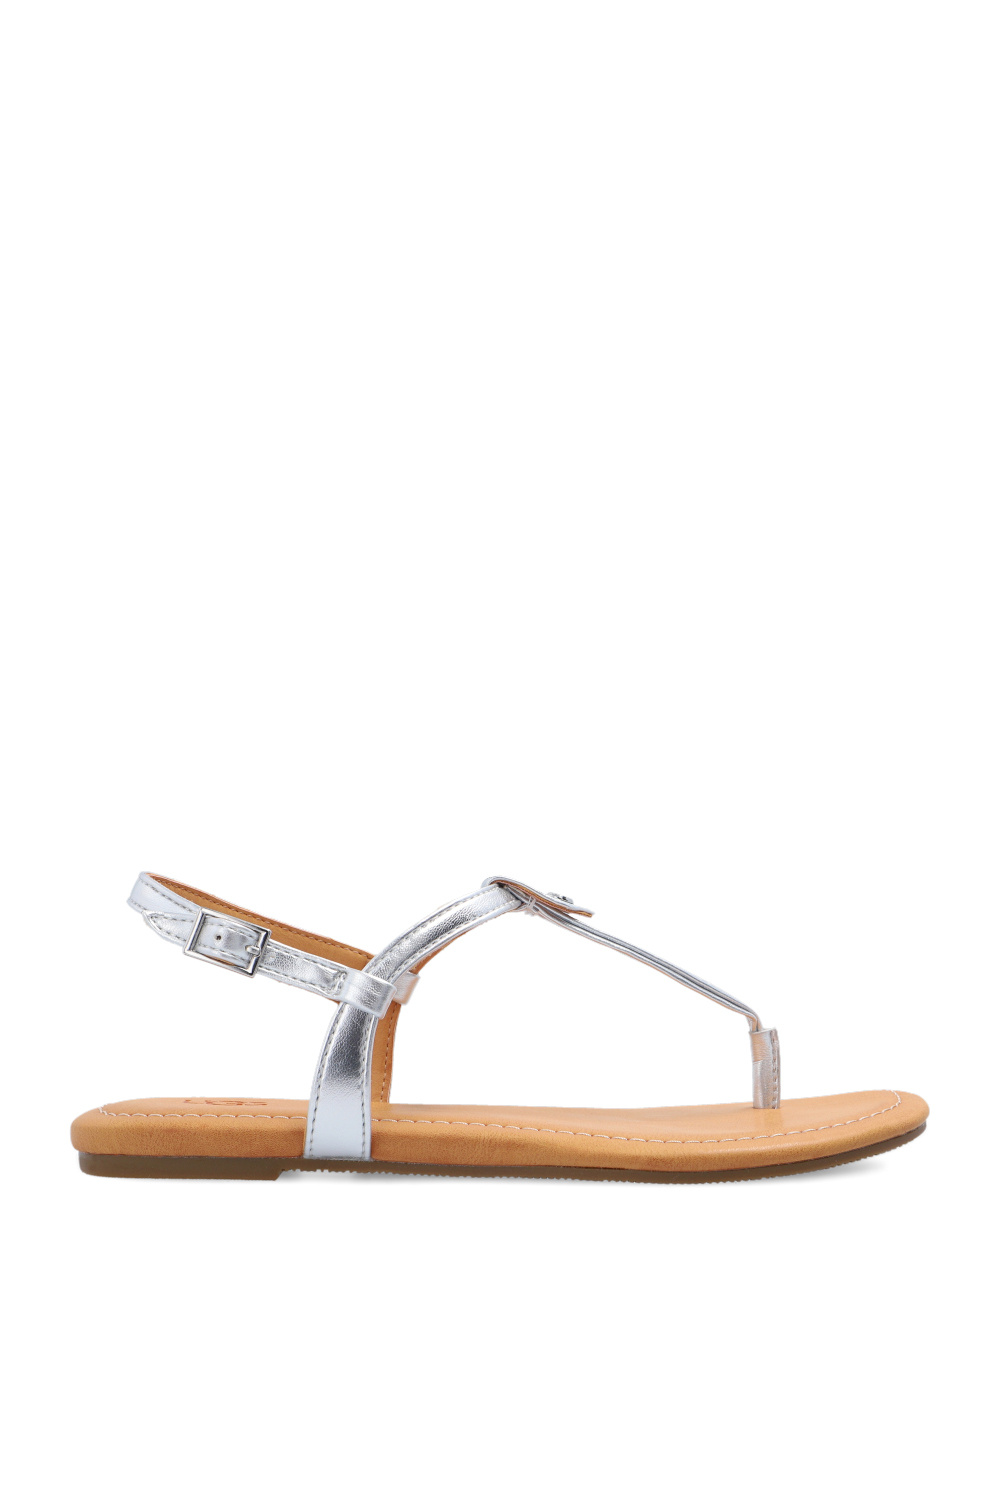 ugg Boots ‘Madeena’ sandals